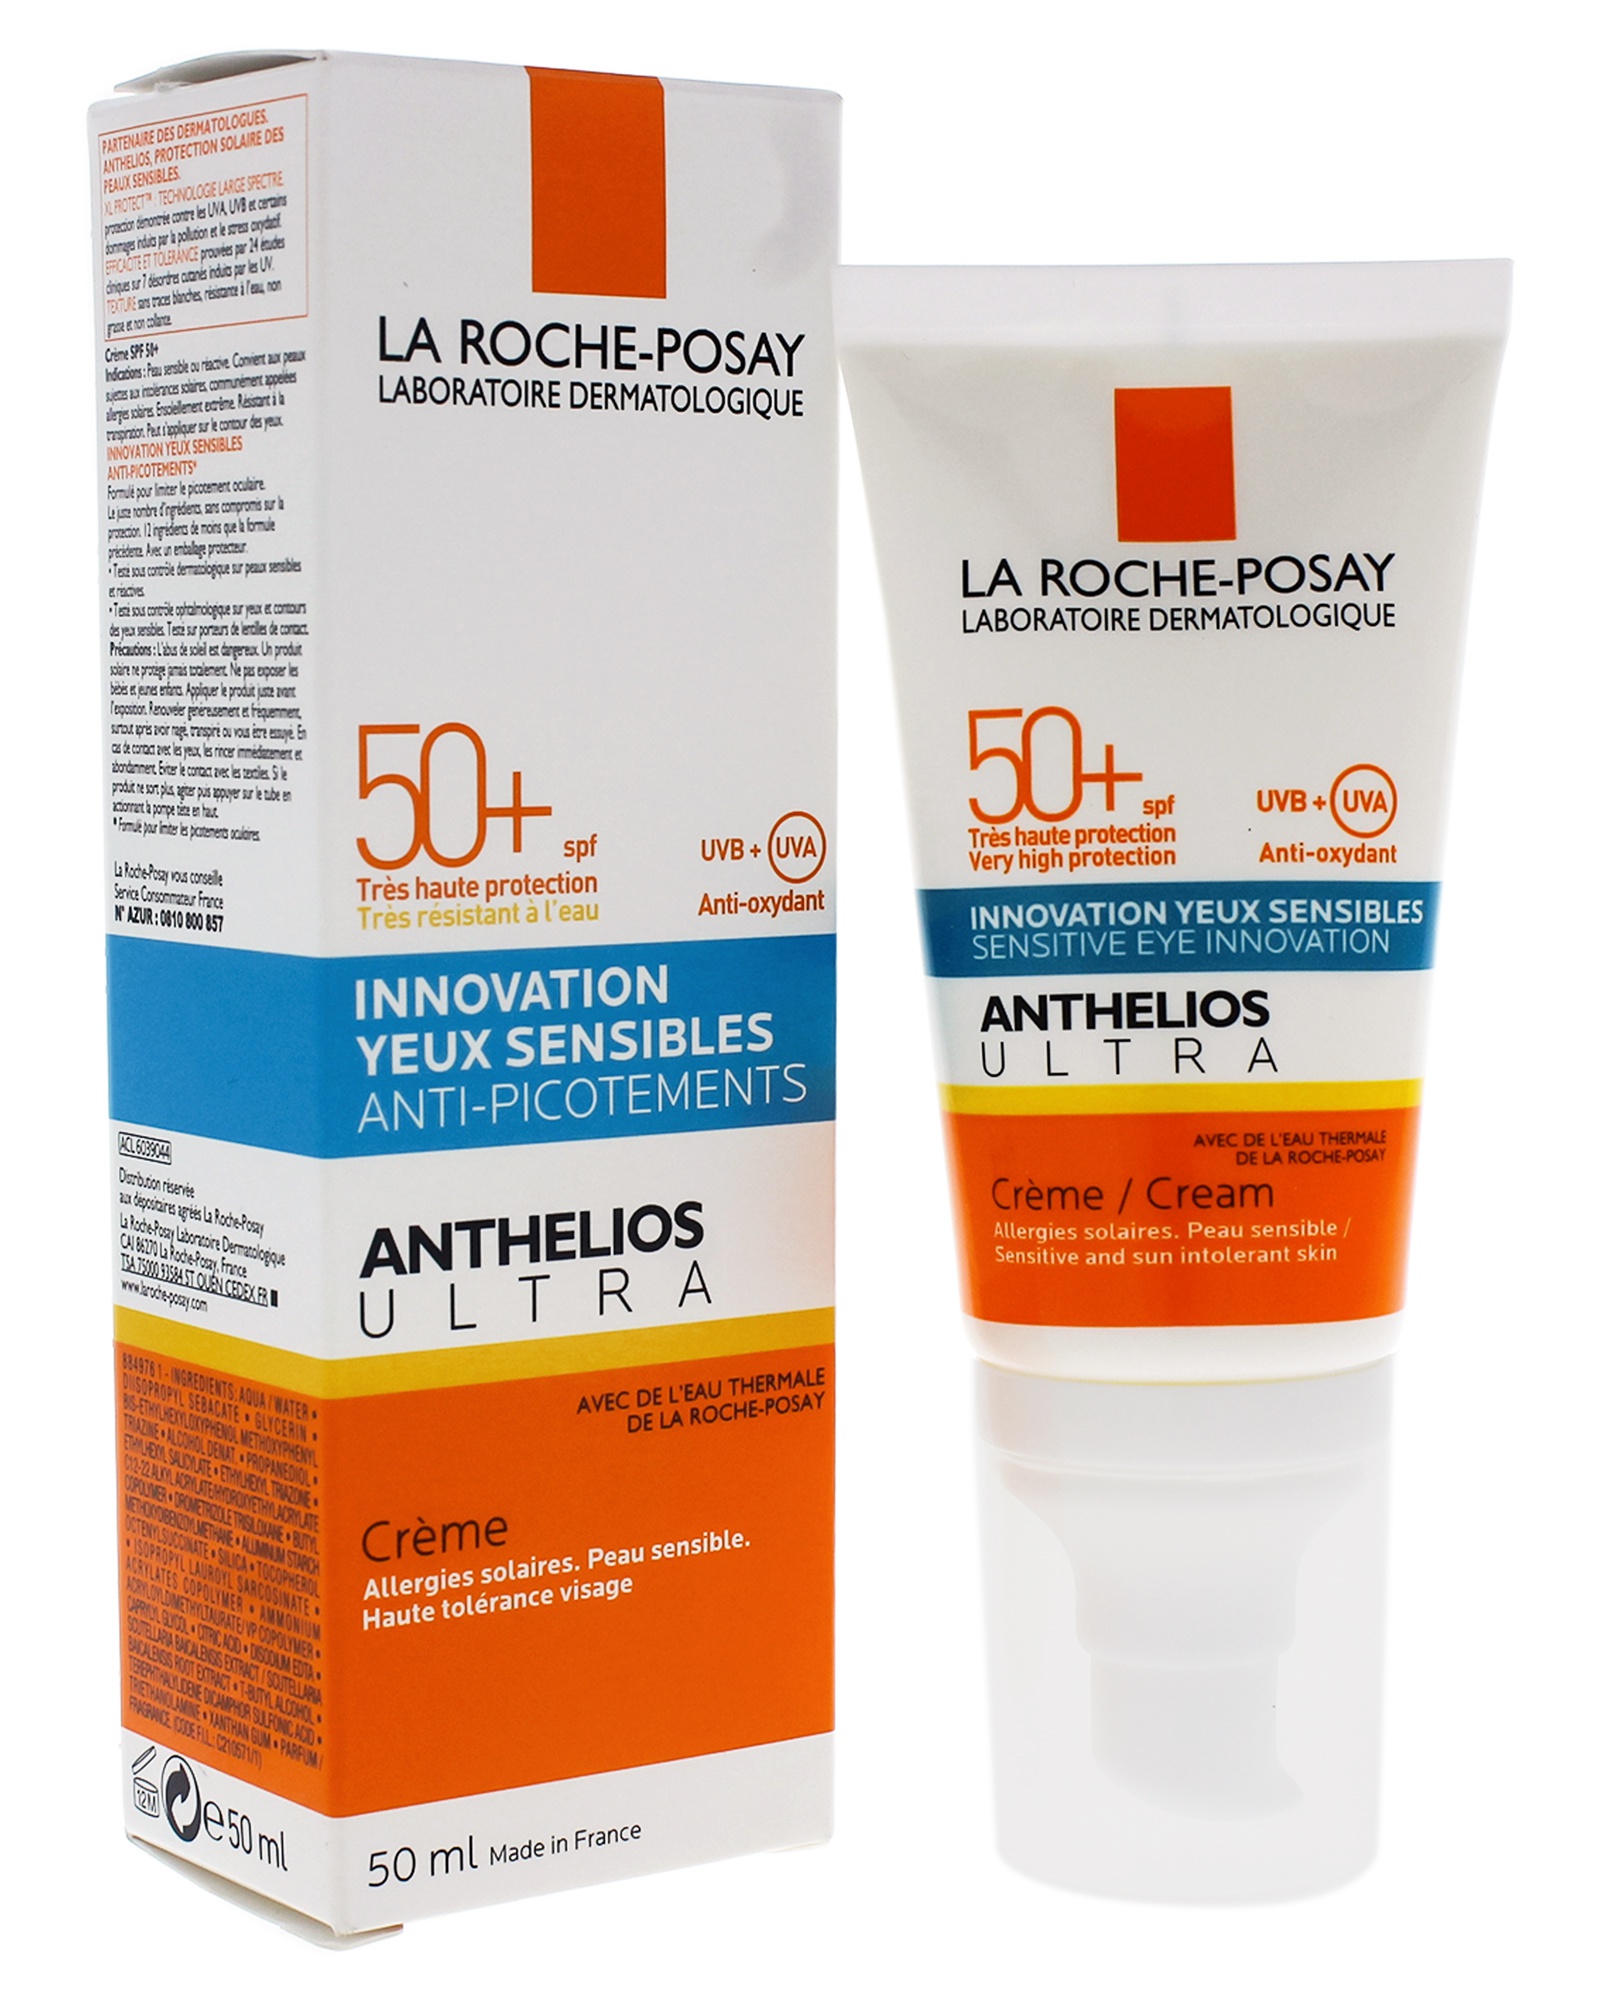 La Roche-Posay SPF 50+ Anthelios Ultra Sensitive